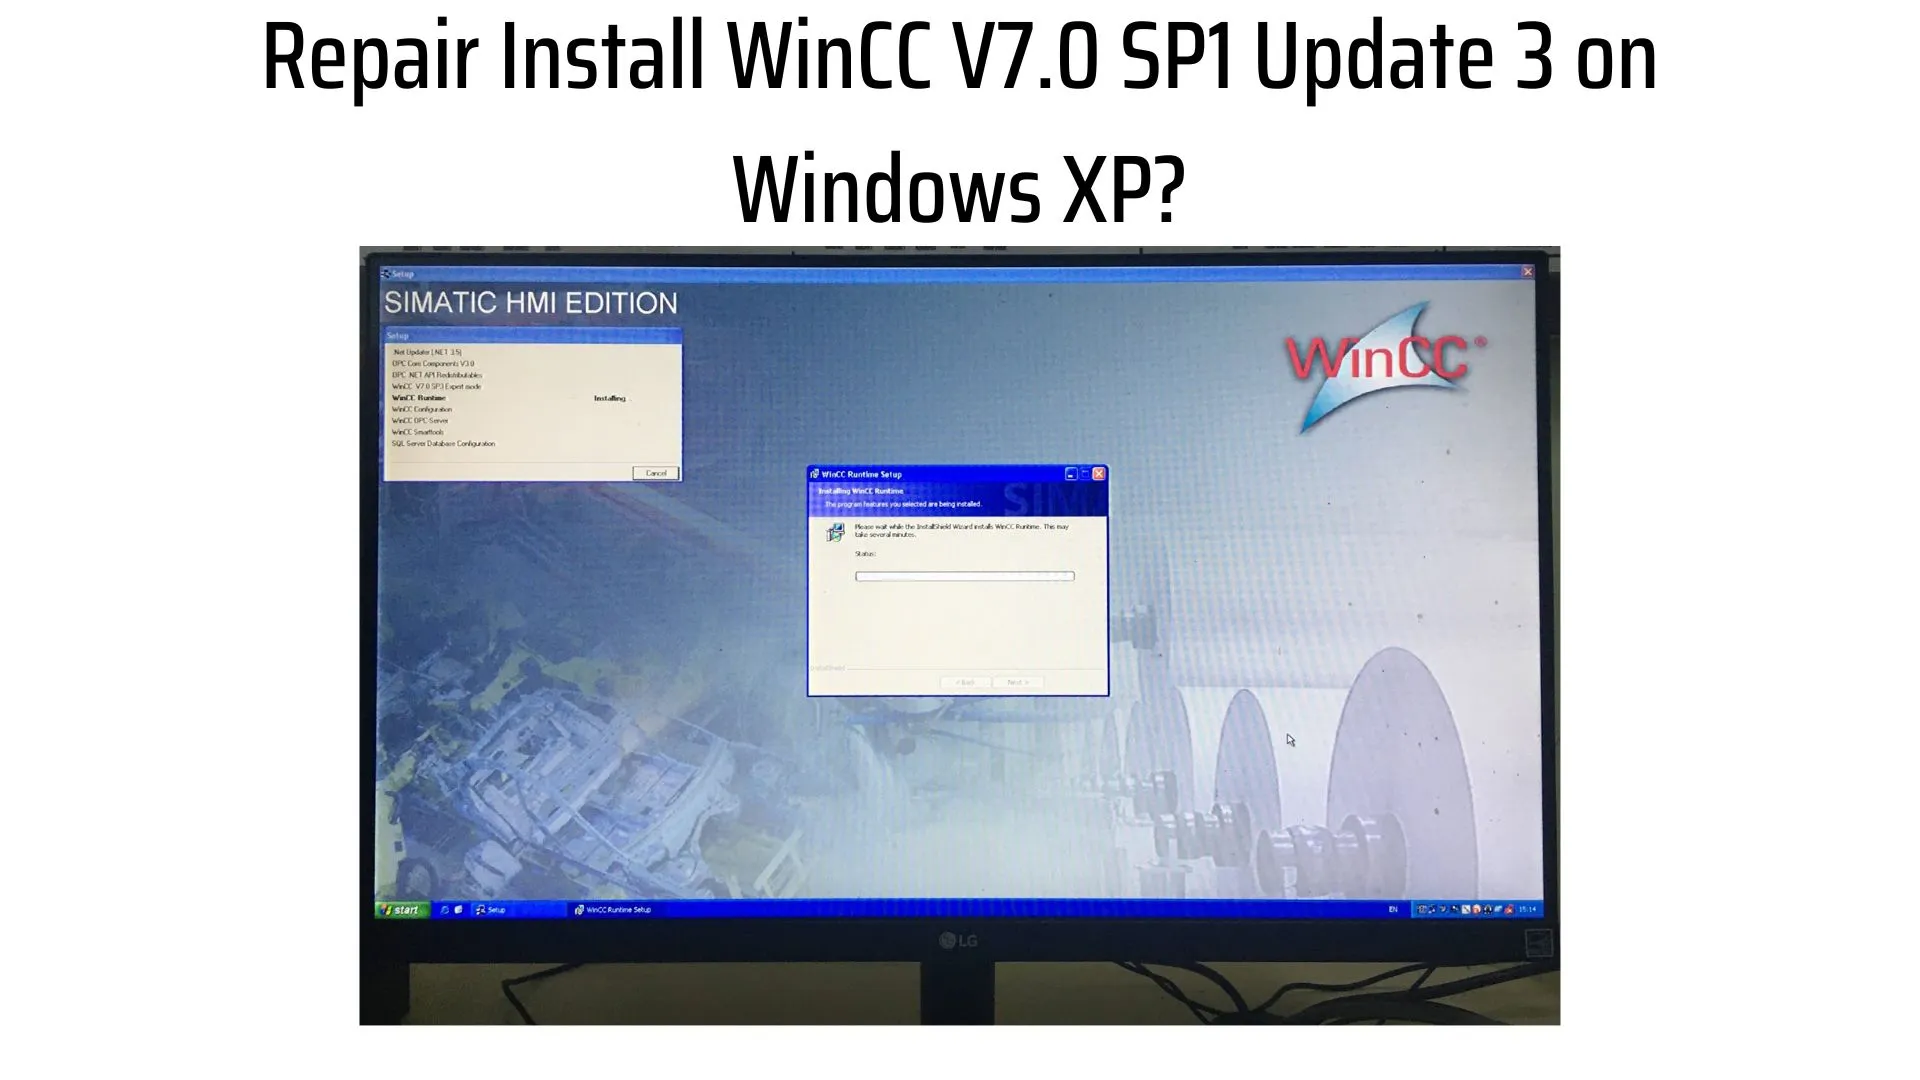 Repair Install WinCC V7.0 SP1 Update 3 on Windows XP?